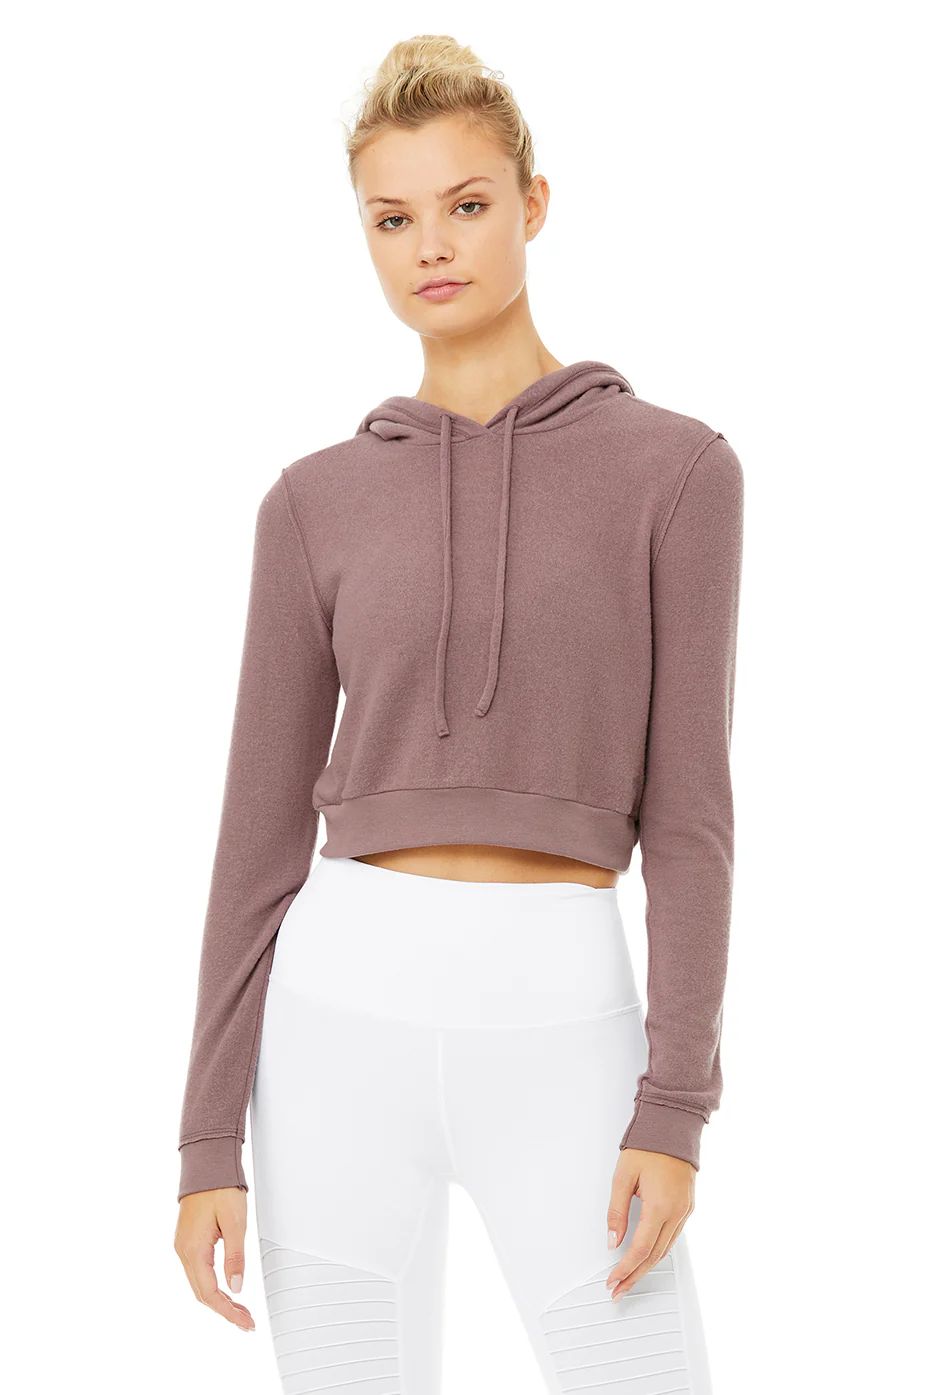 Alo Yoga Getaway Hoodie - Smoky Quartz - Size XS - Brushed sweater Jersey | Alo Yoga